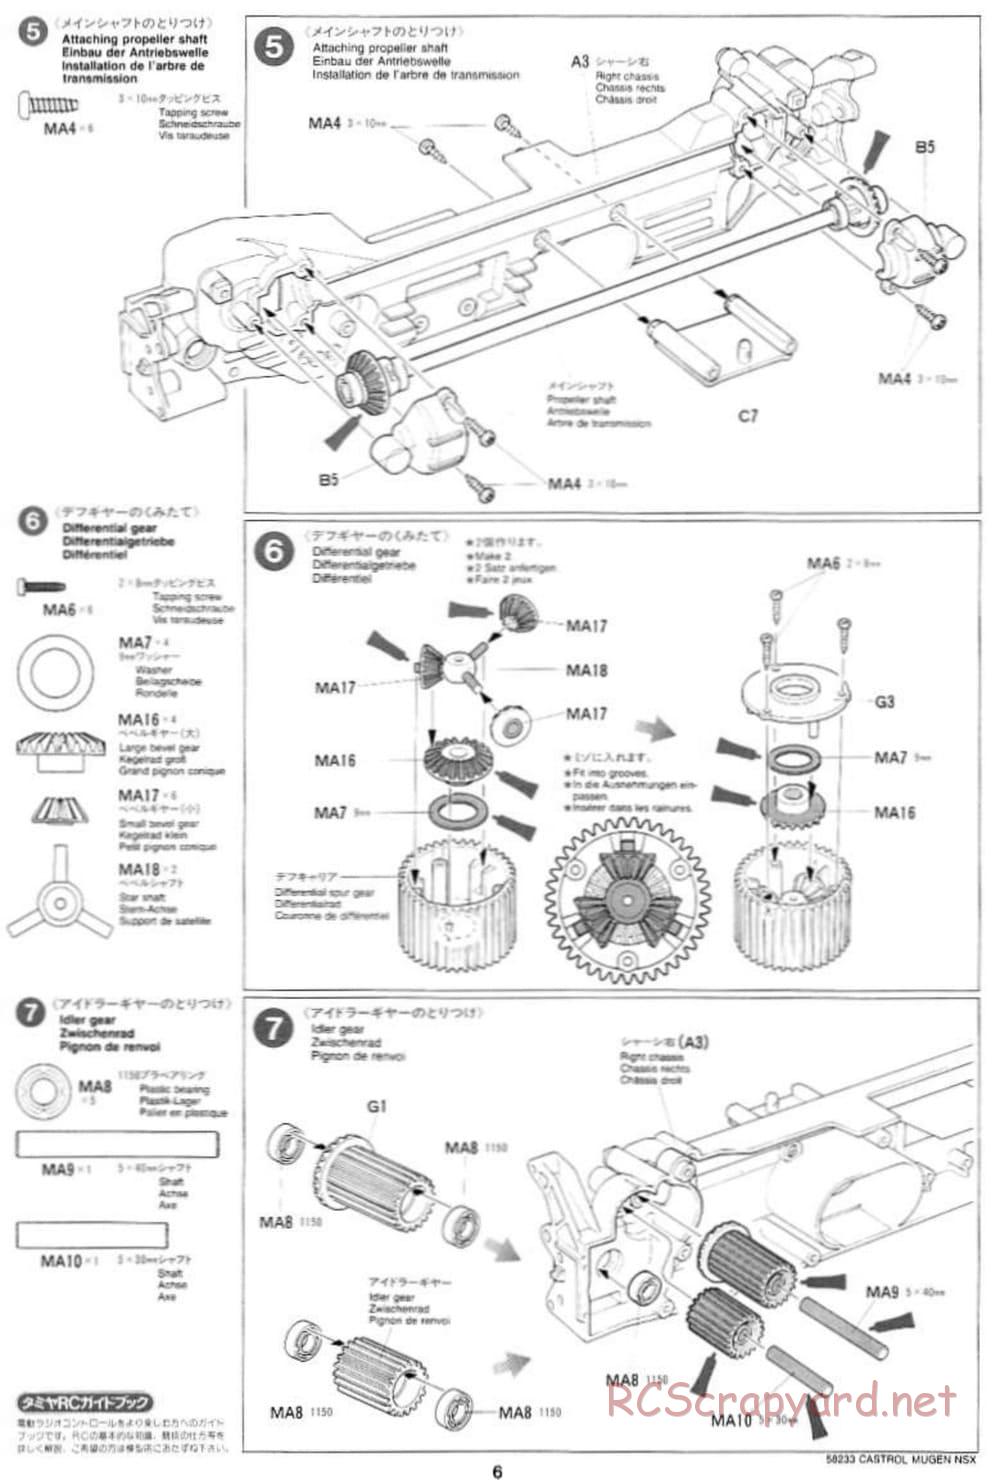 Tamiya - Castrol Mugen NSX - TL-01 Chassis - Manual - Page 6